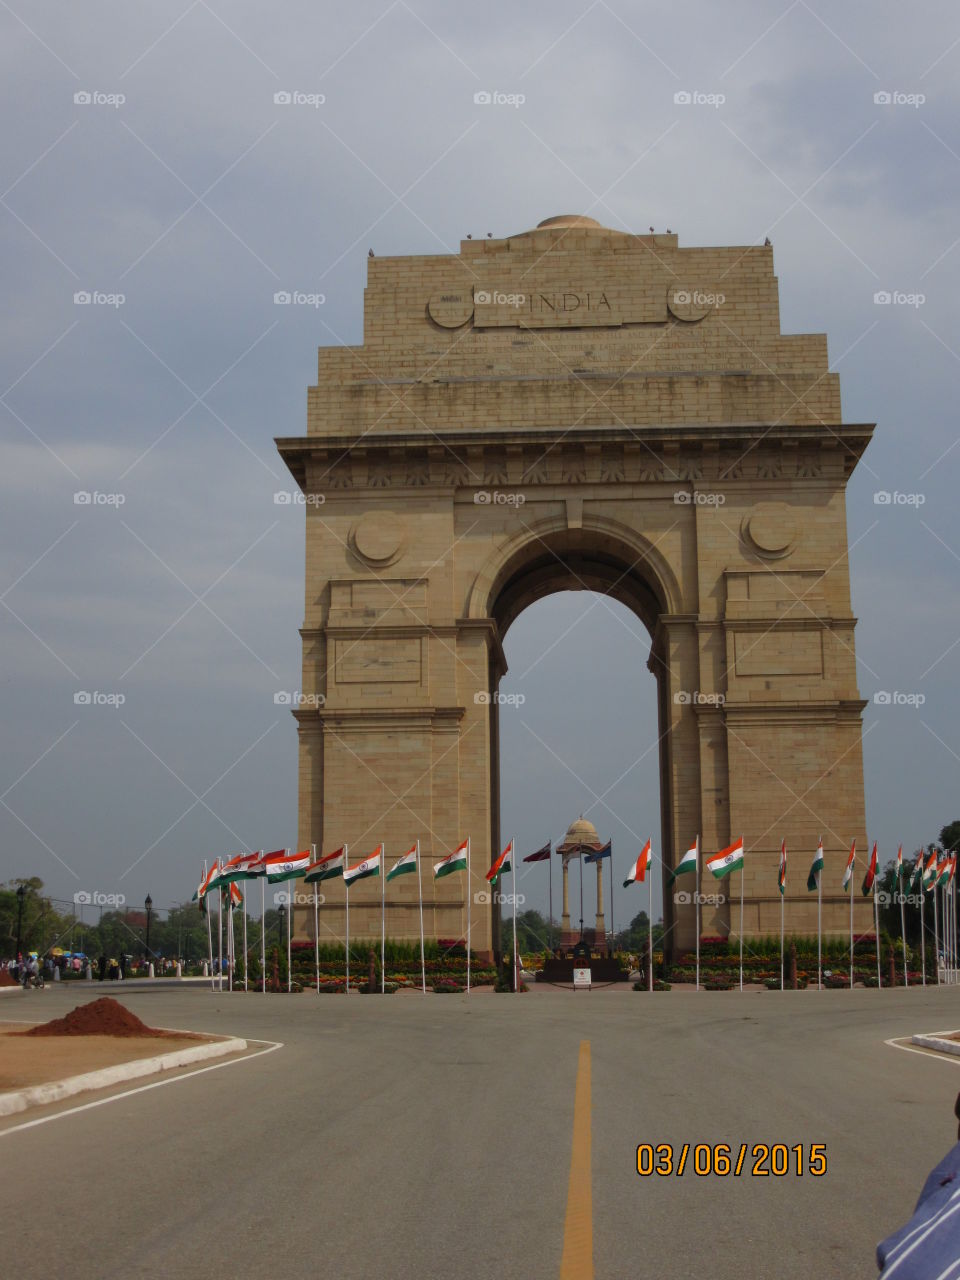 India's war memorial gate in Delhi, India